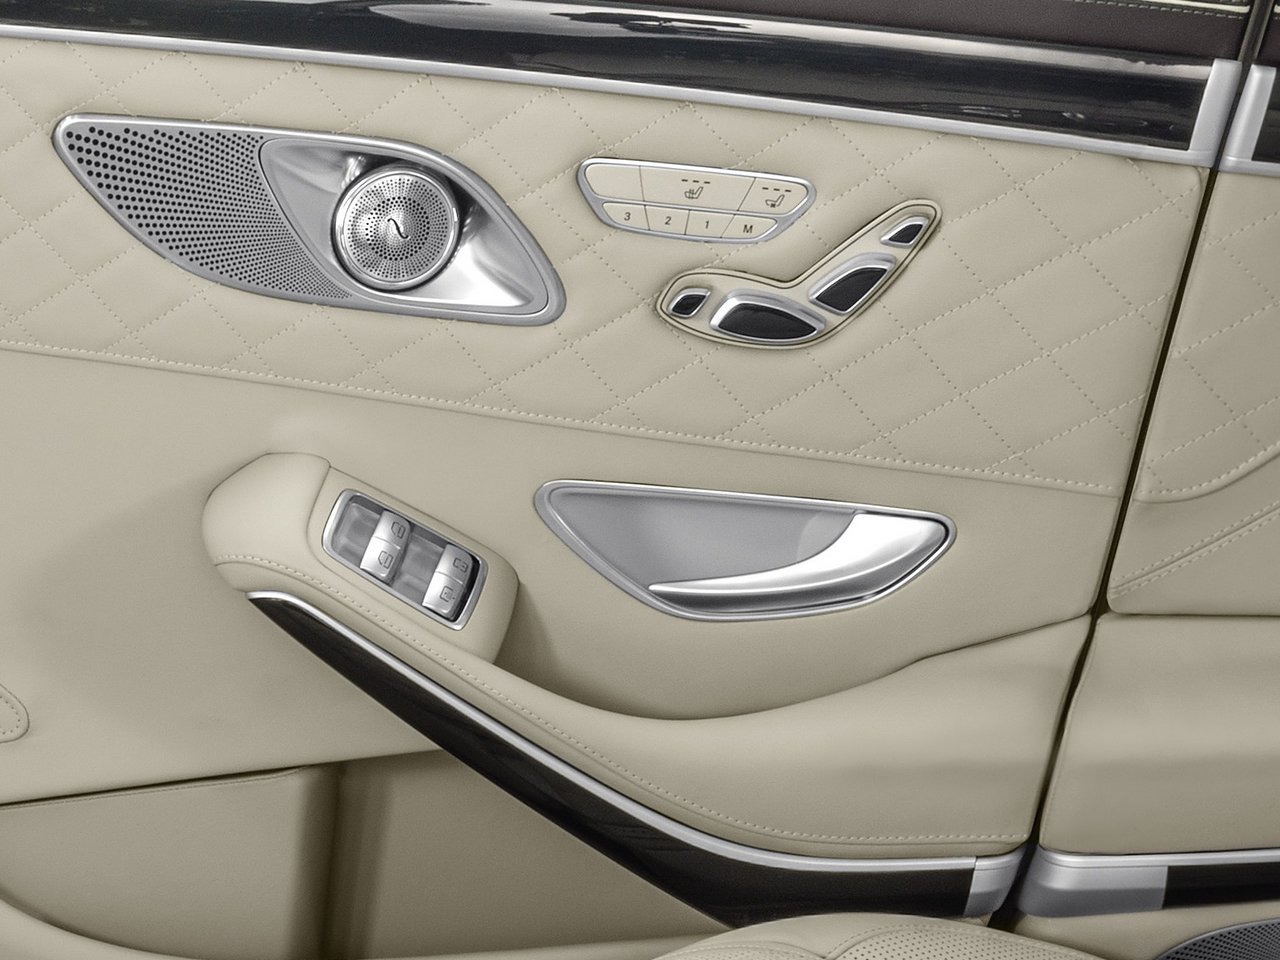 Mercedes-Maybach S600 Pullman